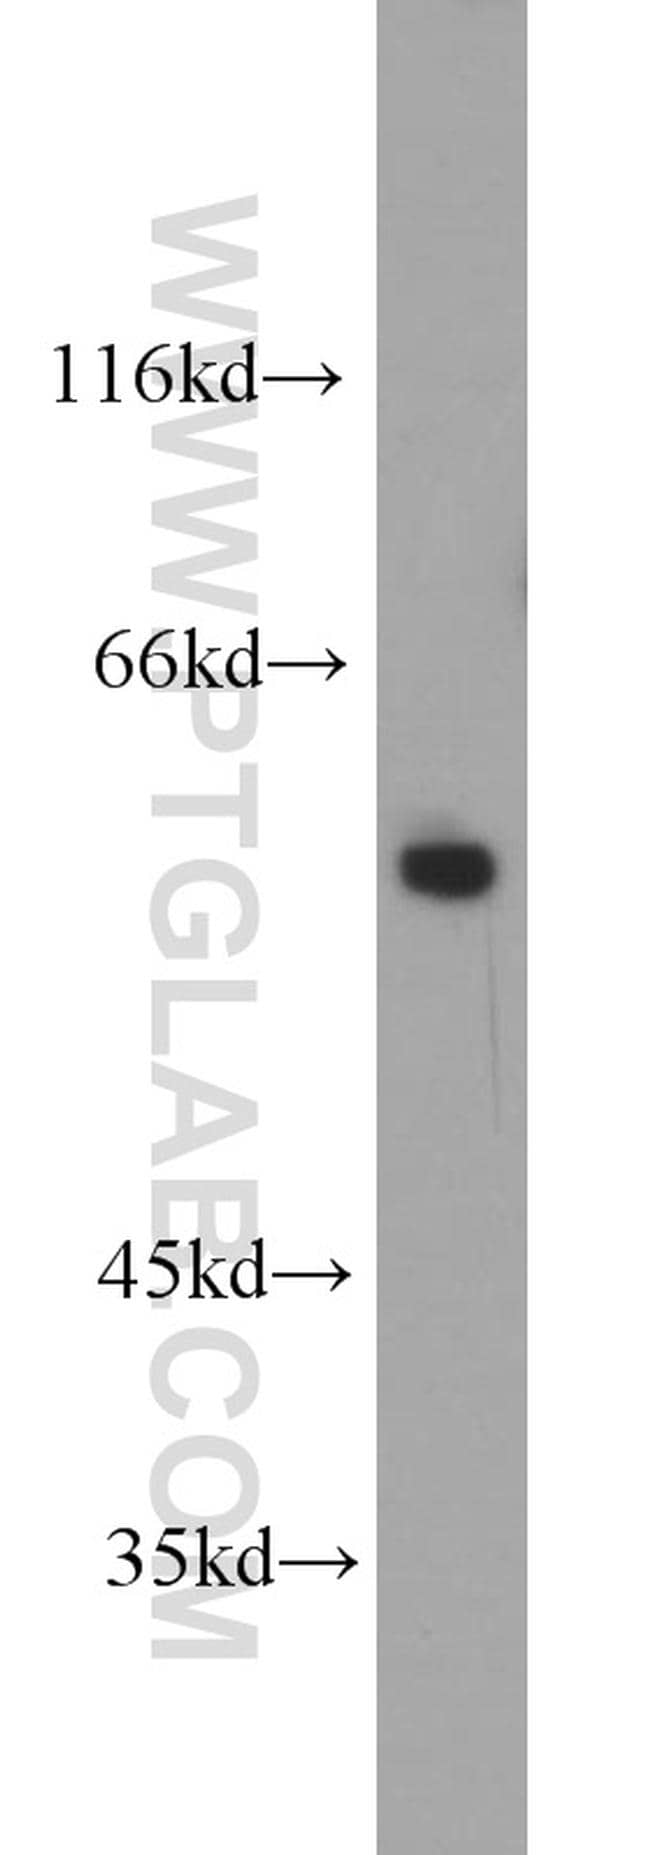 FBXO5 Antibody in Western Blot (WB)